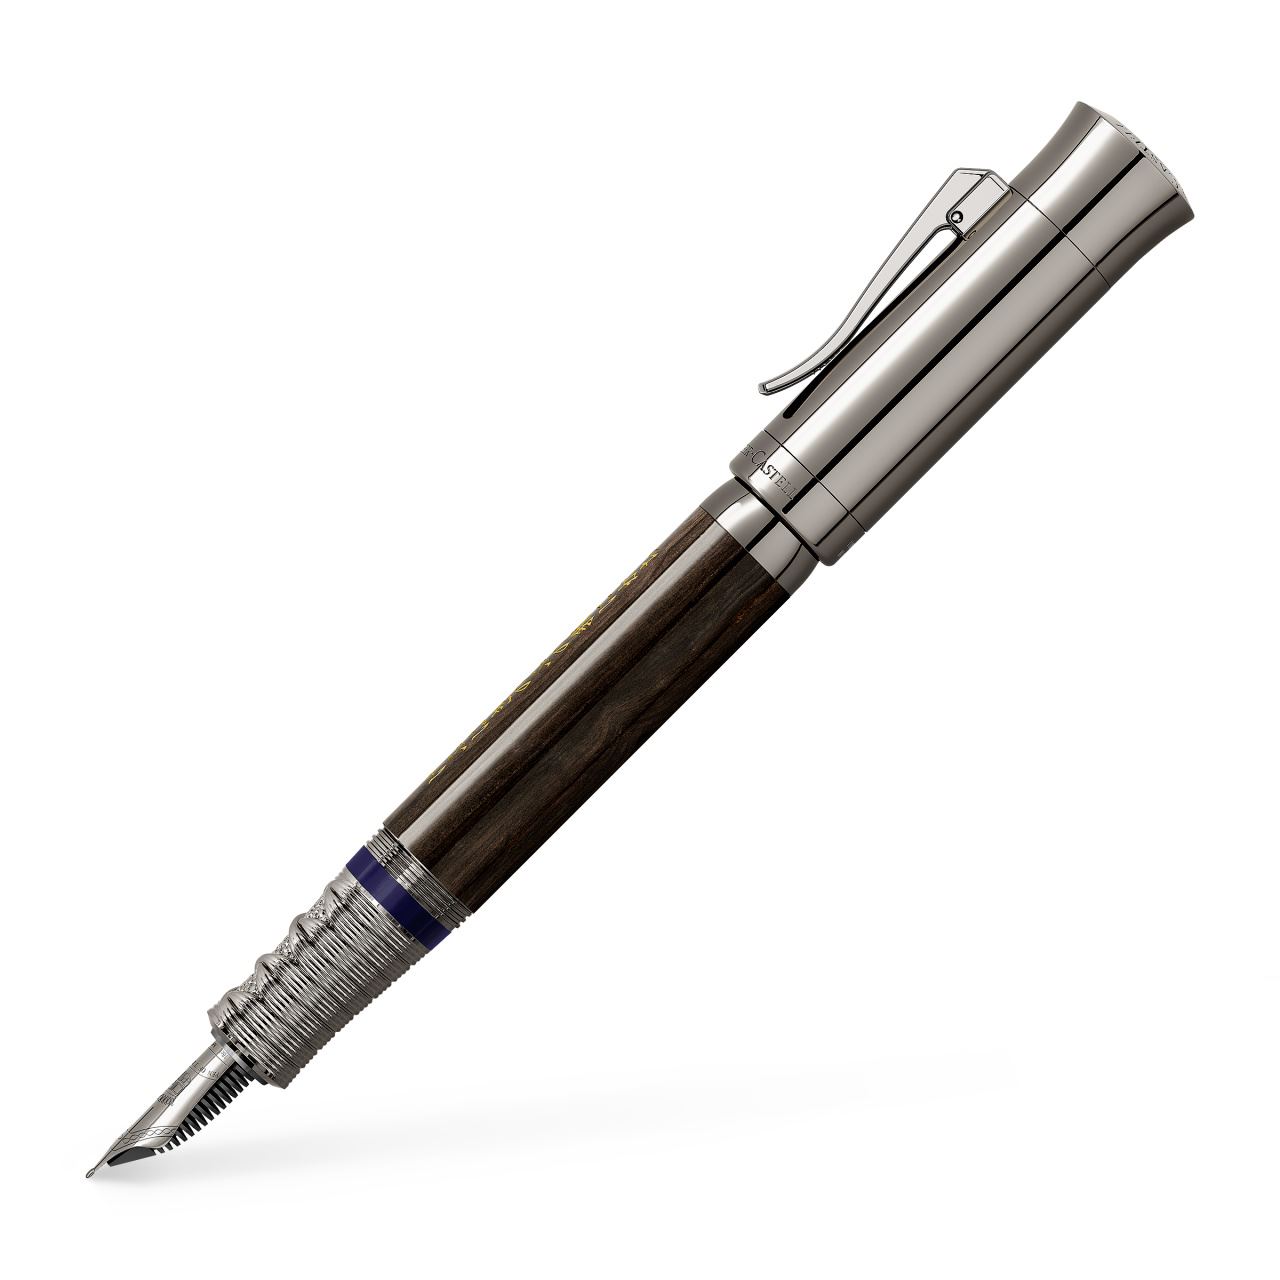 Graf-von-Faber-Castell - Penna stilografica Pen of the Year 2019 Rutenio, Broad